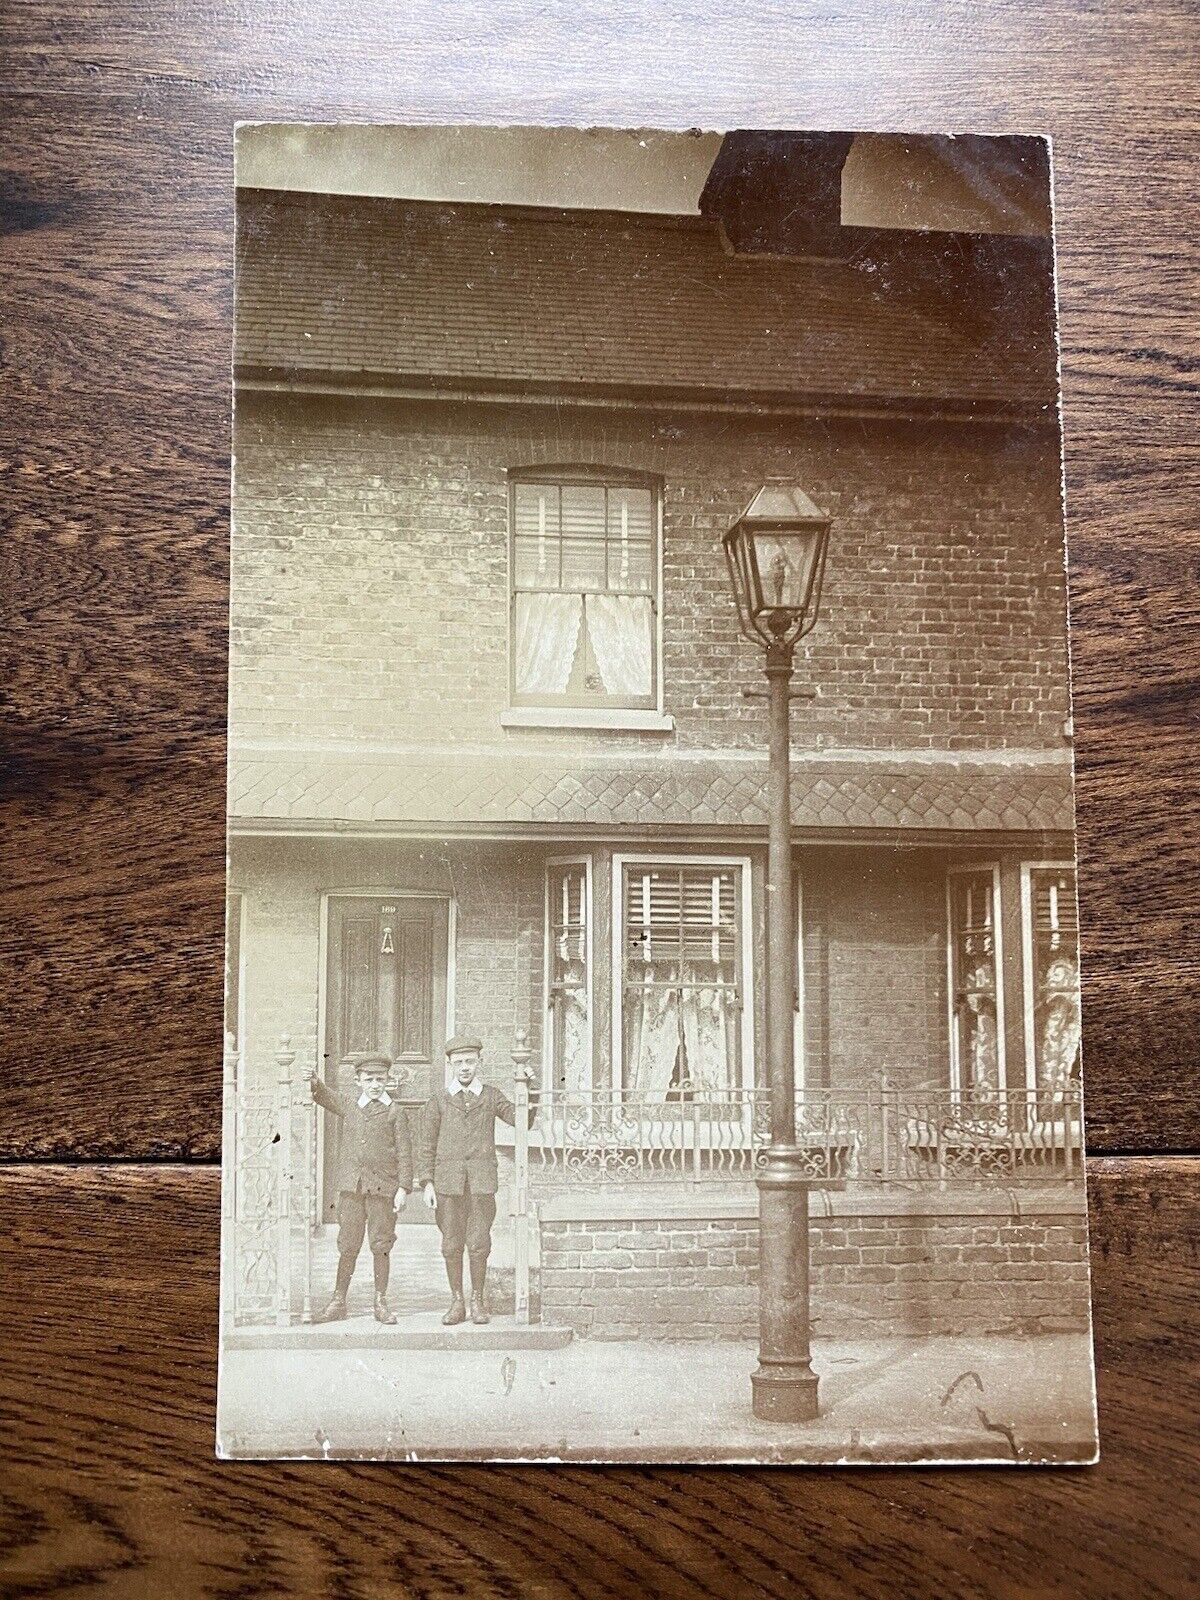 Boys Edwardian Era Home & Street Lamp RPPC Well Dressed Kids Vintage Photo